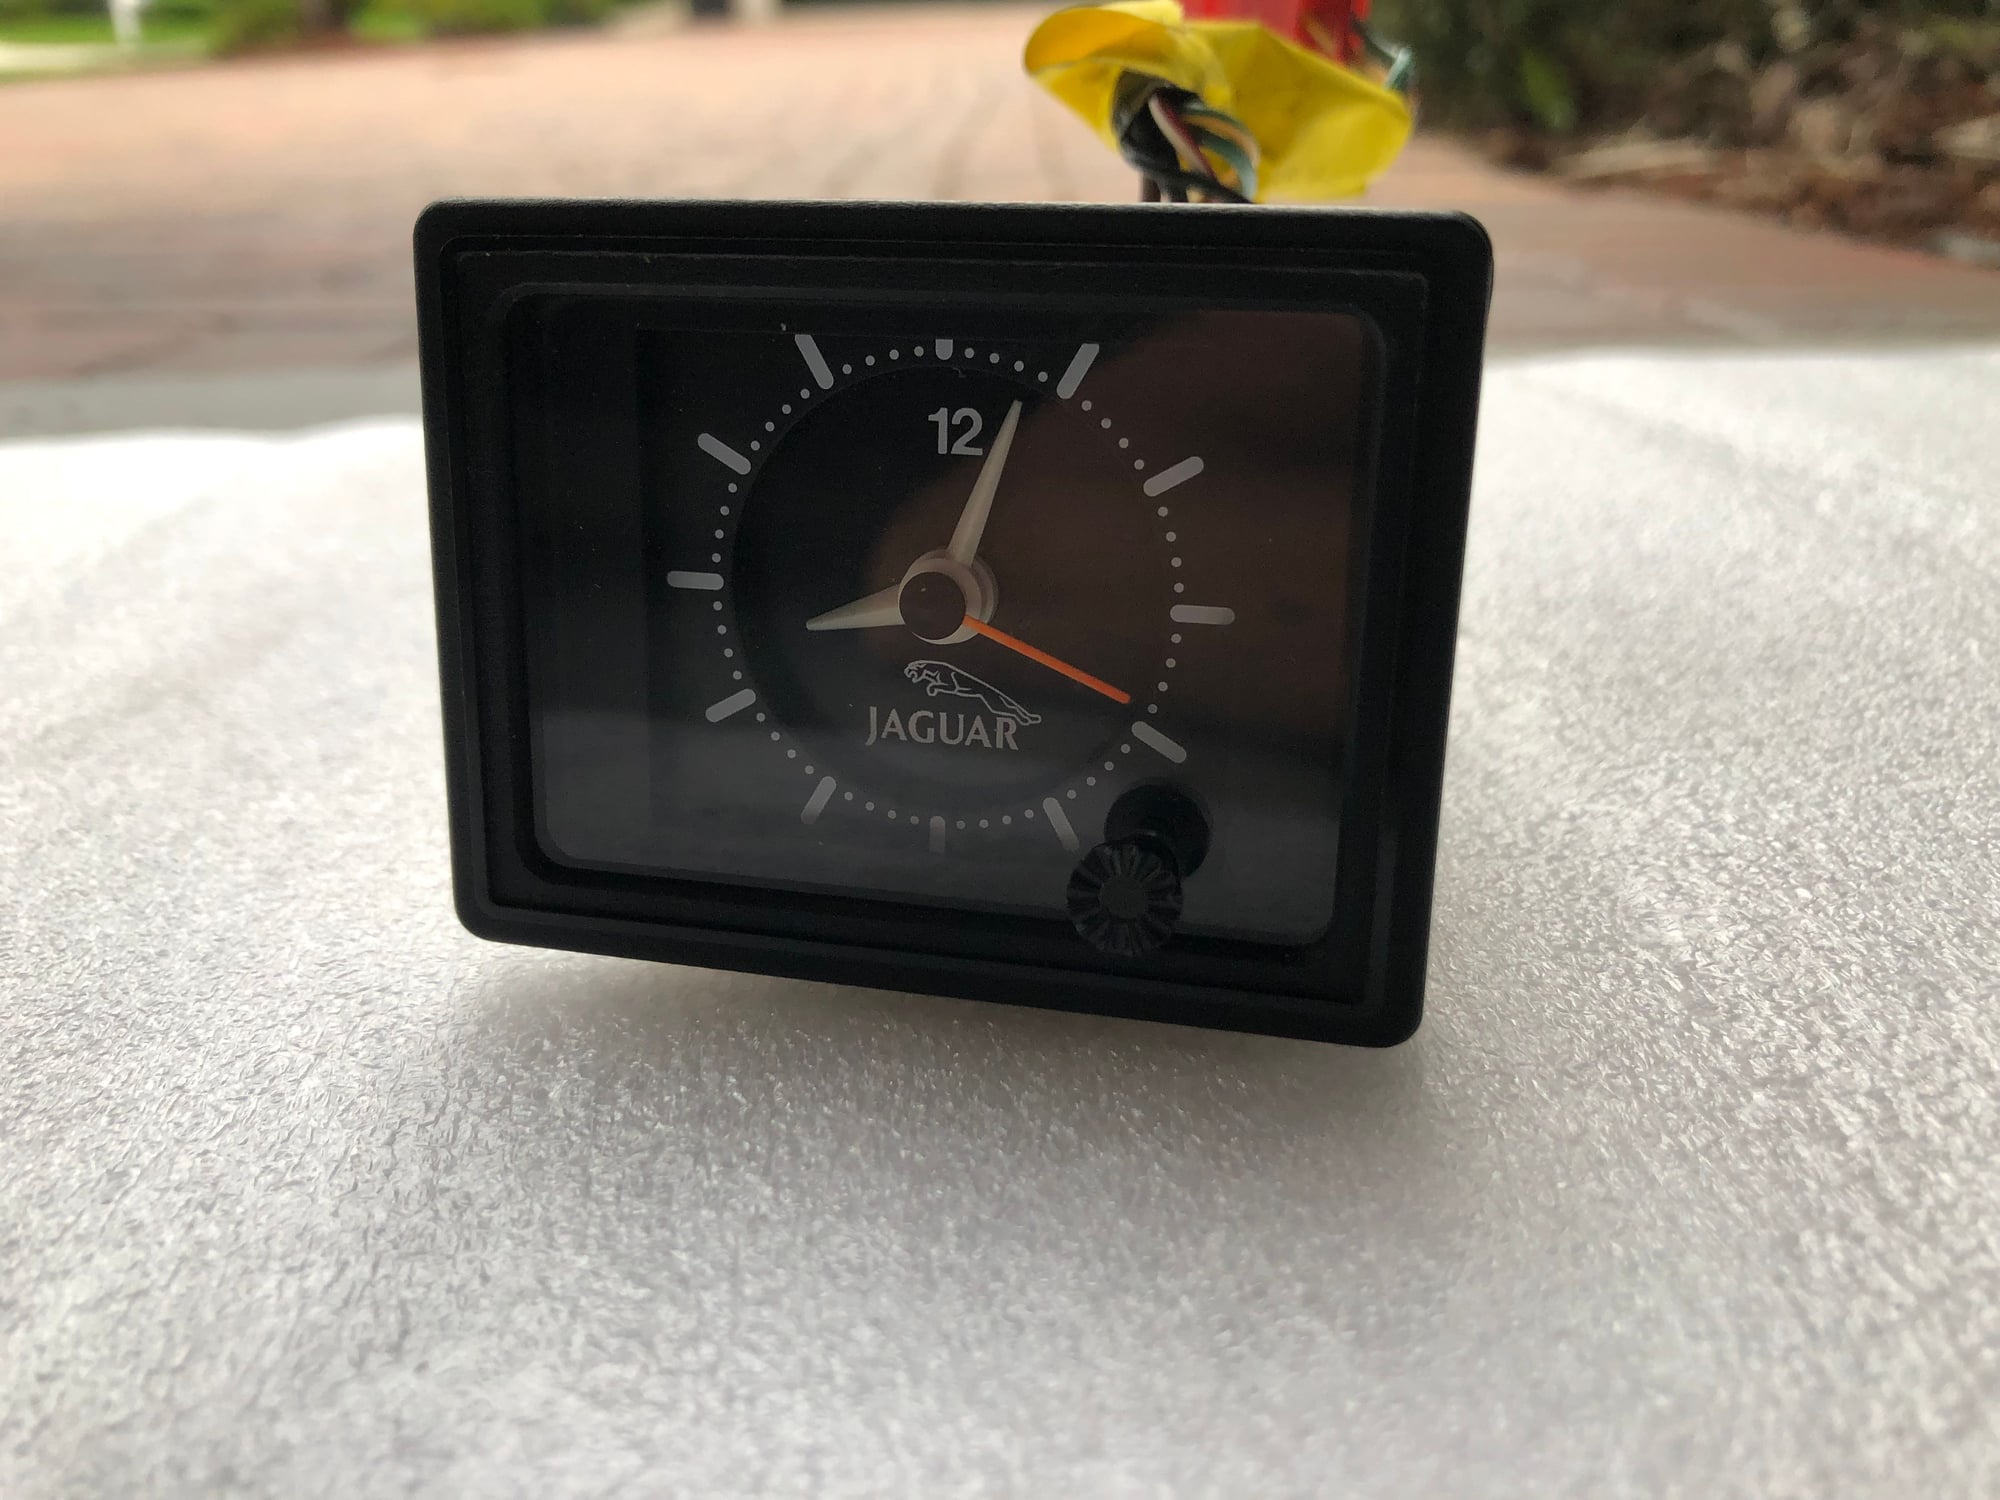 Audio Video/Electronics - Analogue clock - Used - 1994 to 1996 Jaguar XJS - Stuart, FL 34997, United States